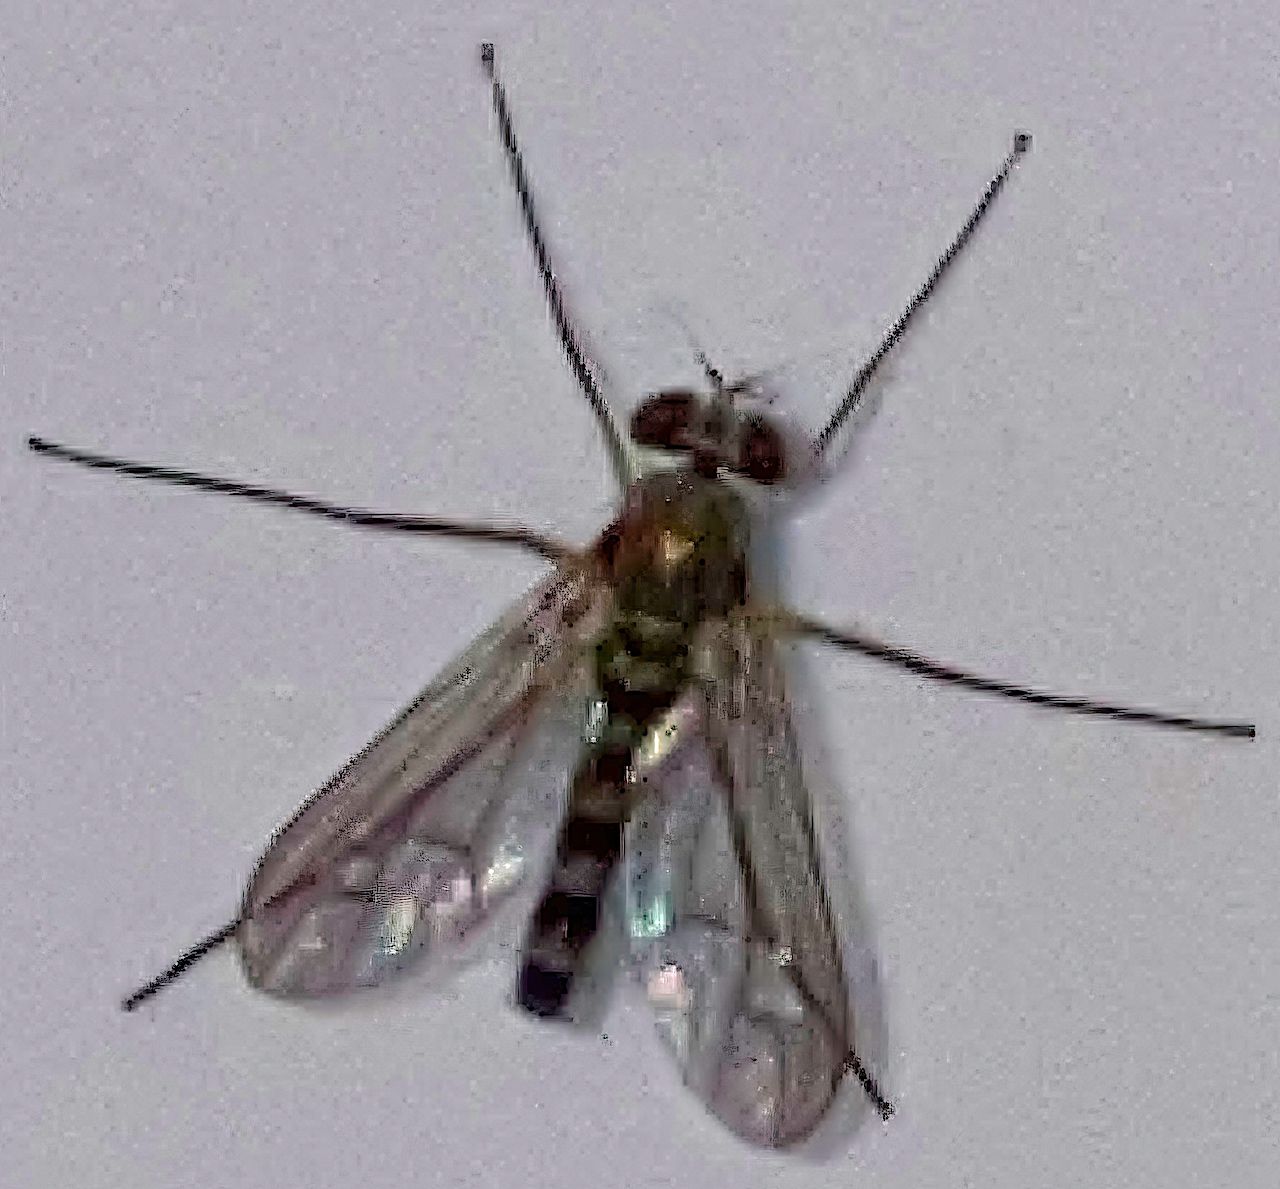 Dolichopodidae: Sciapus sp.